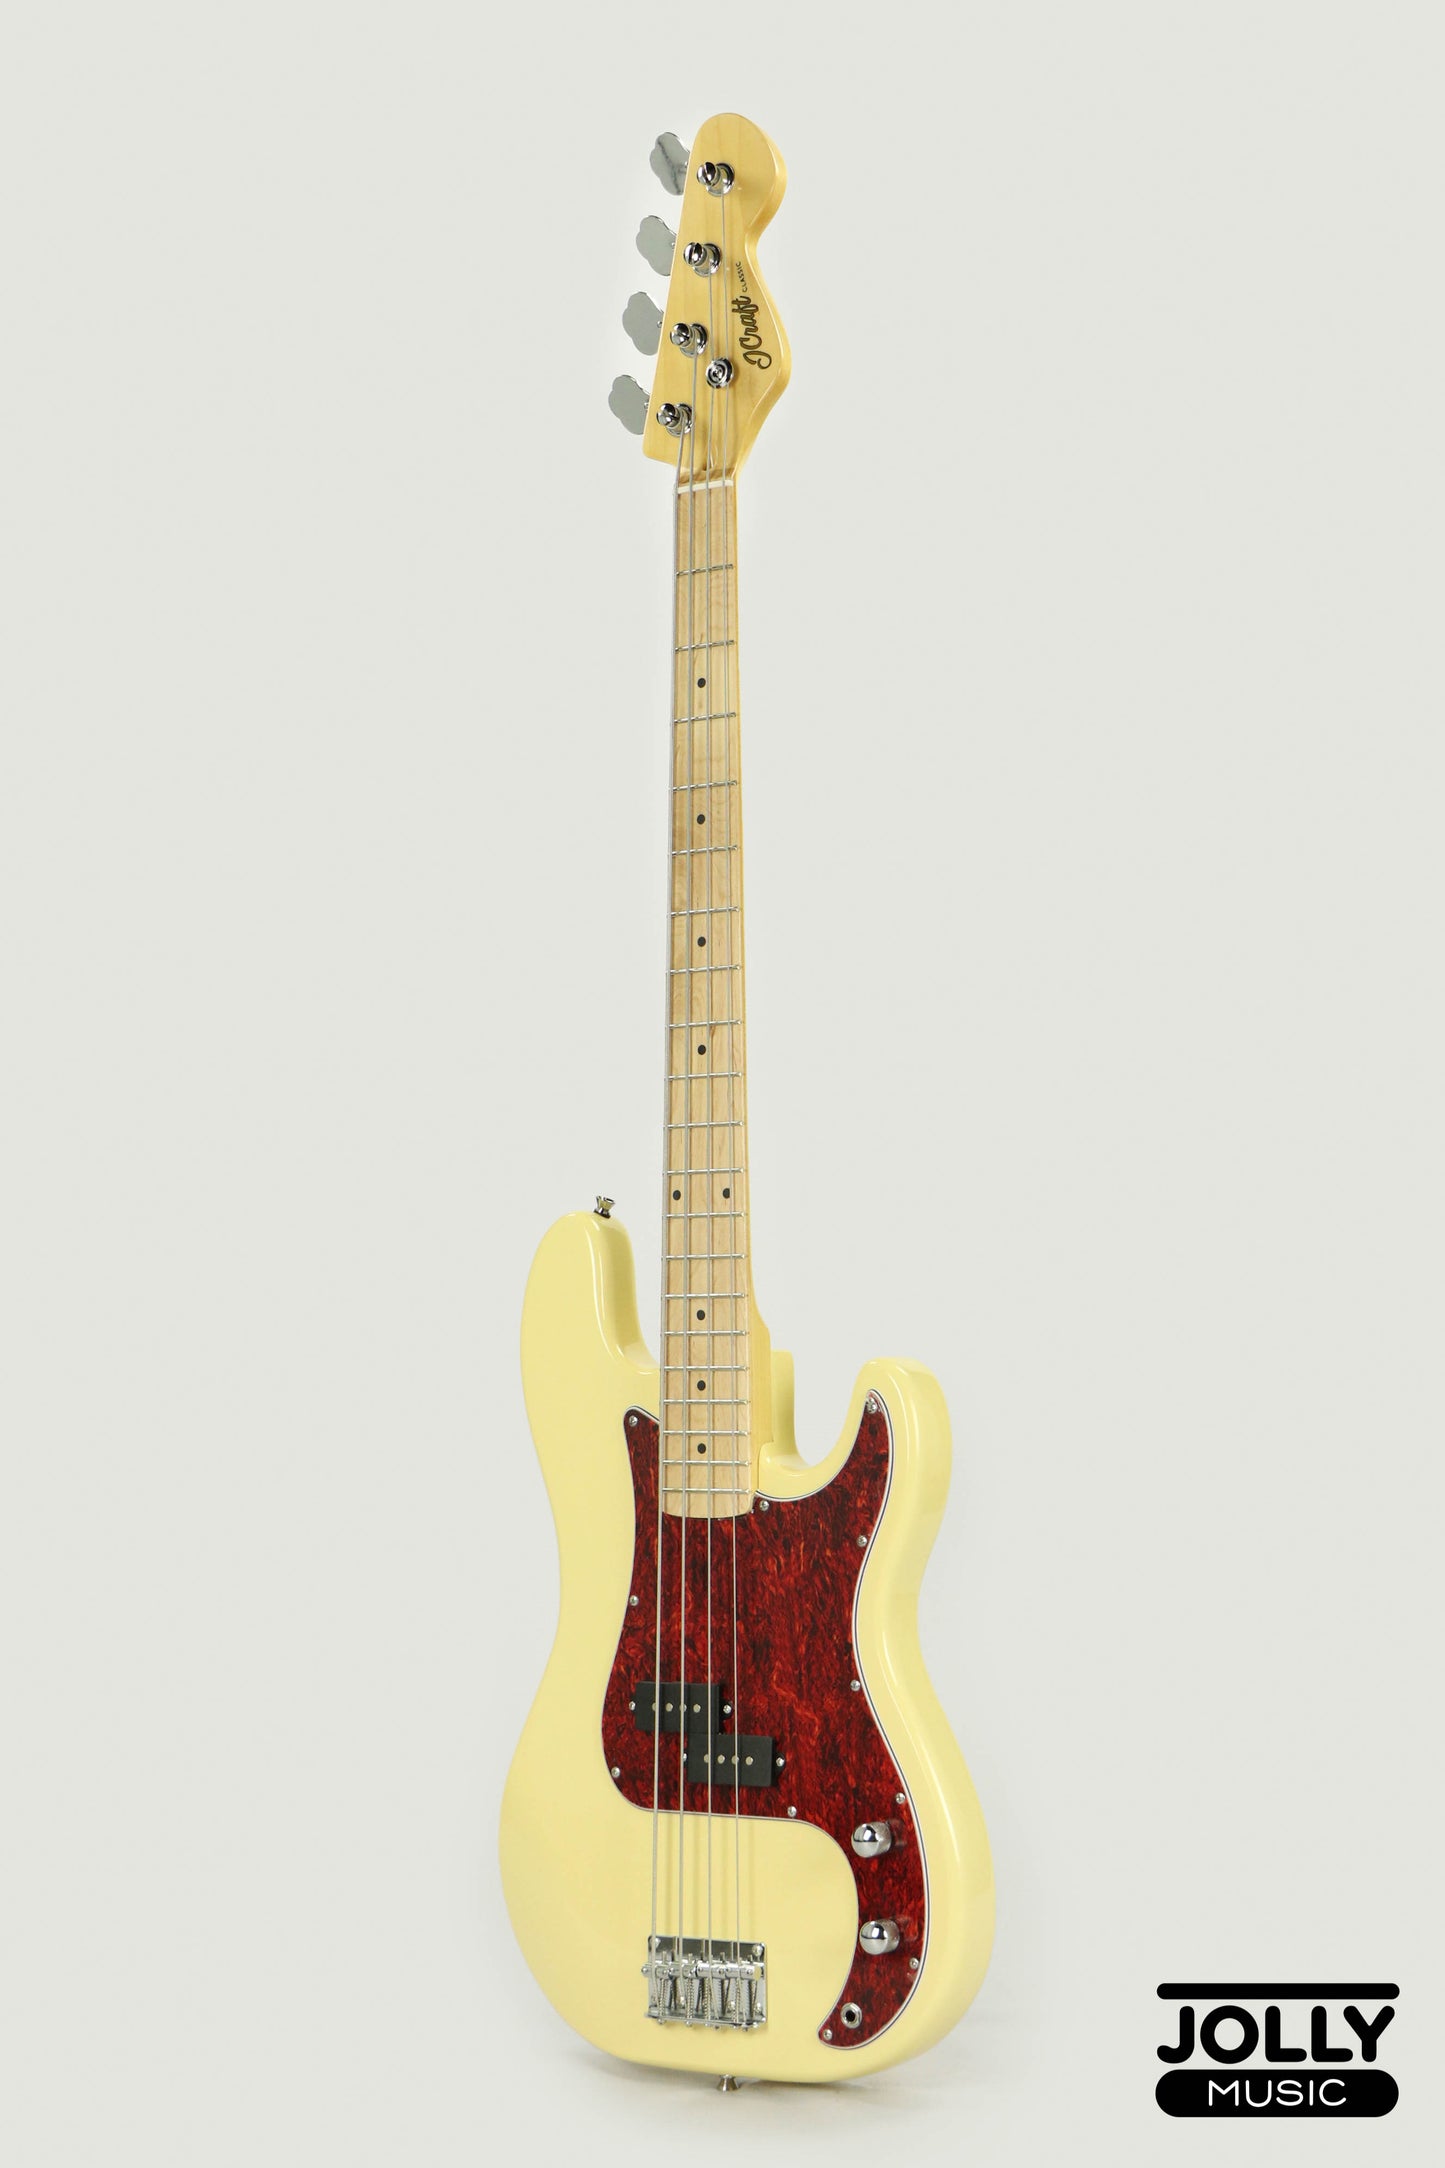 JCraft PB-2 4-String Bass Guitar - Milky White